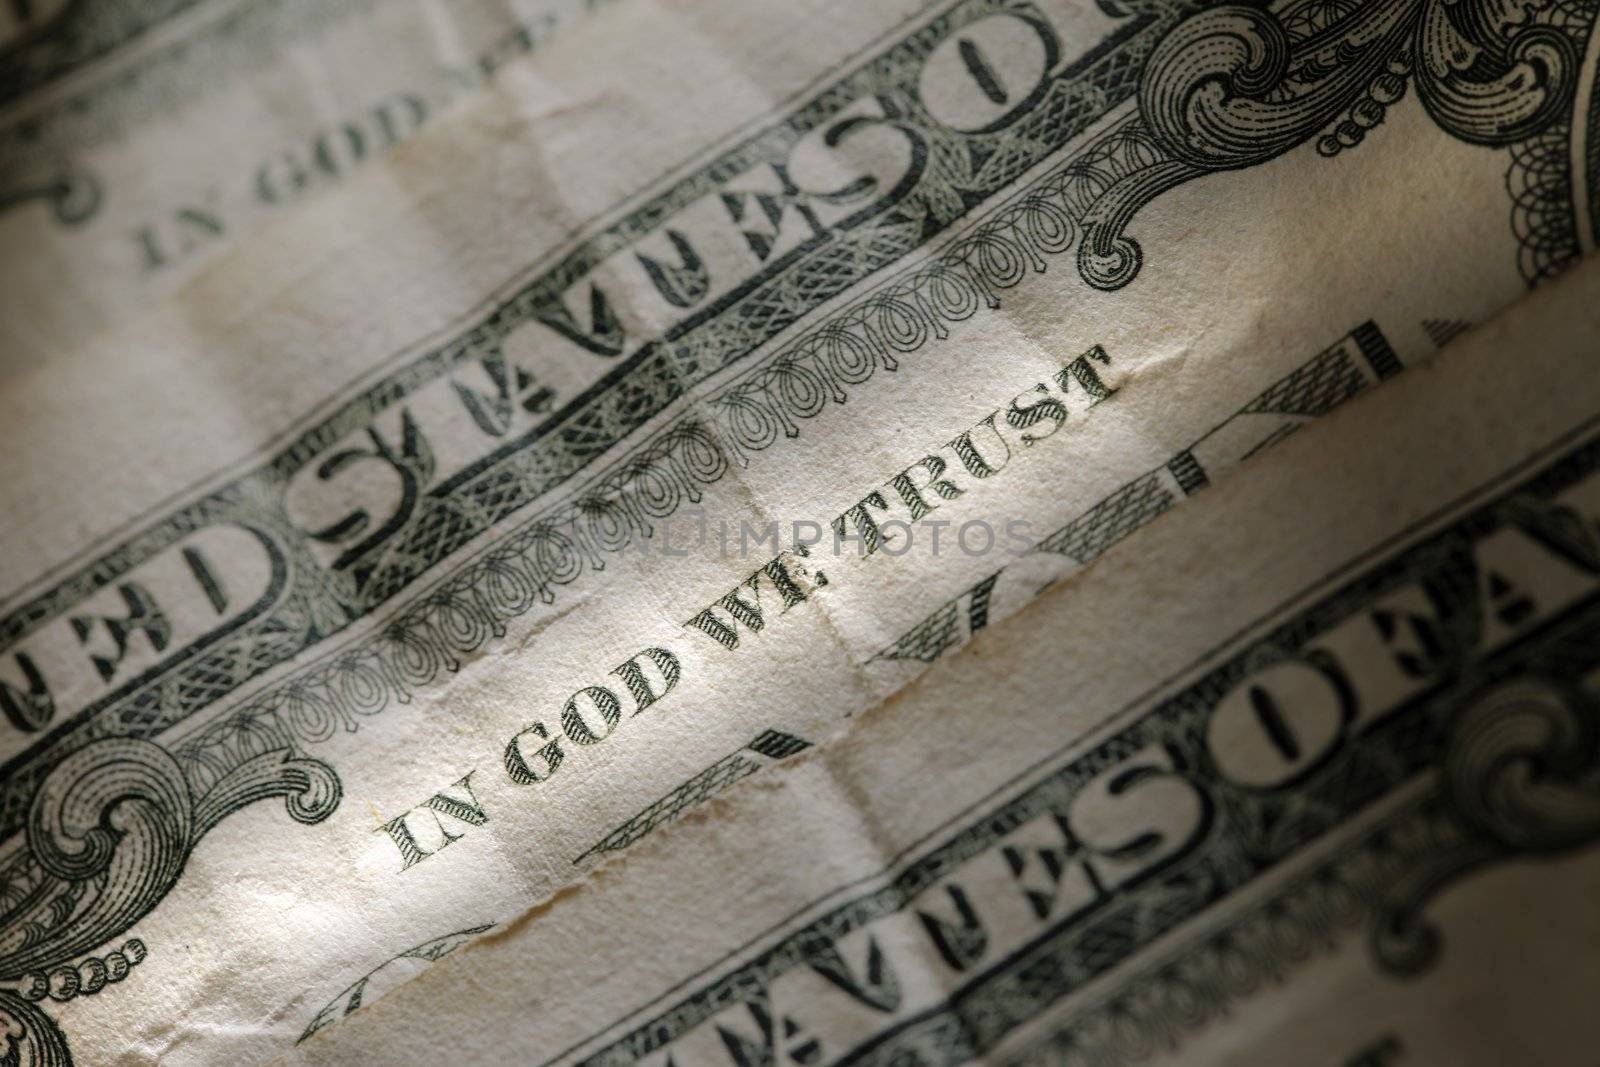 "In God We Trust" on an old american one dollar bill.